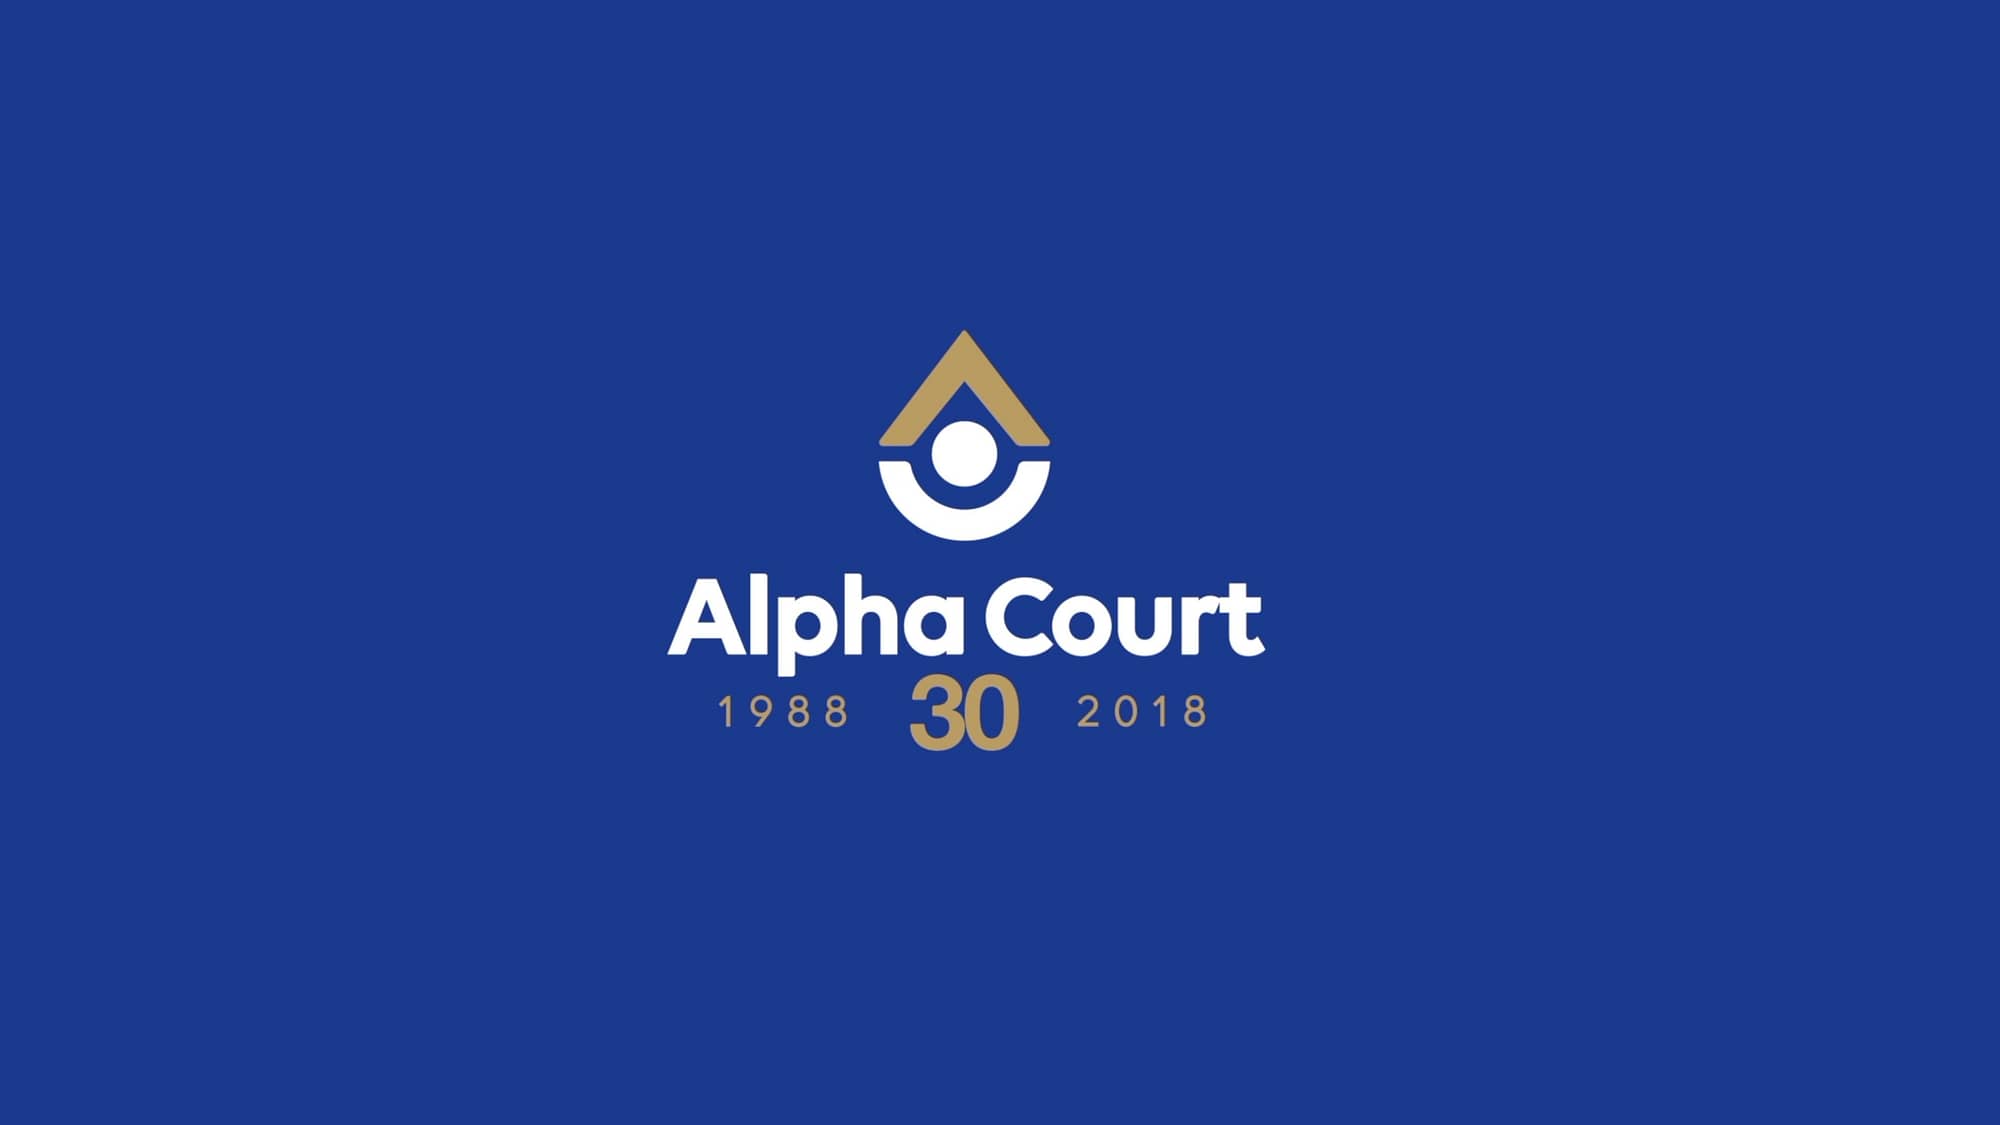 Alpha Court 30th Anniversary